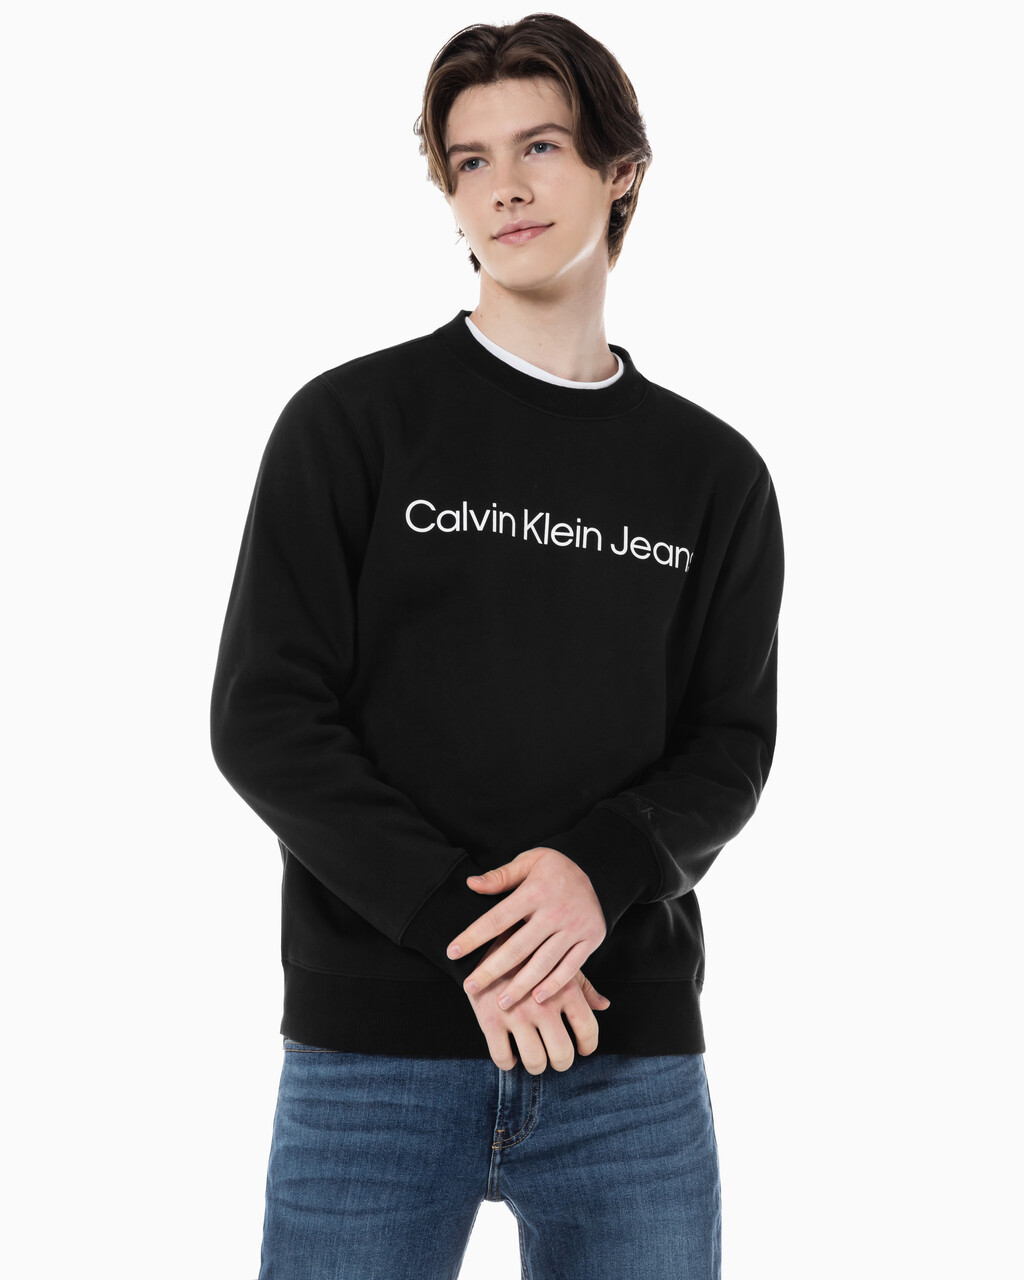 Buy 남성 레귤러핏 인스티튜셔널 로고 기모 스웨트셔츠 in color CK BLACK